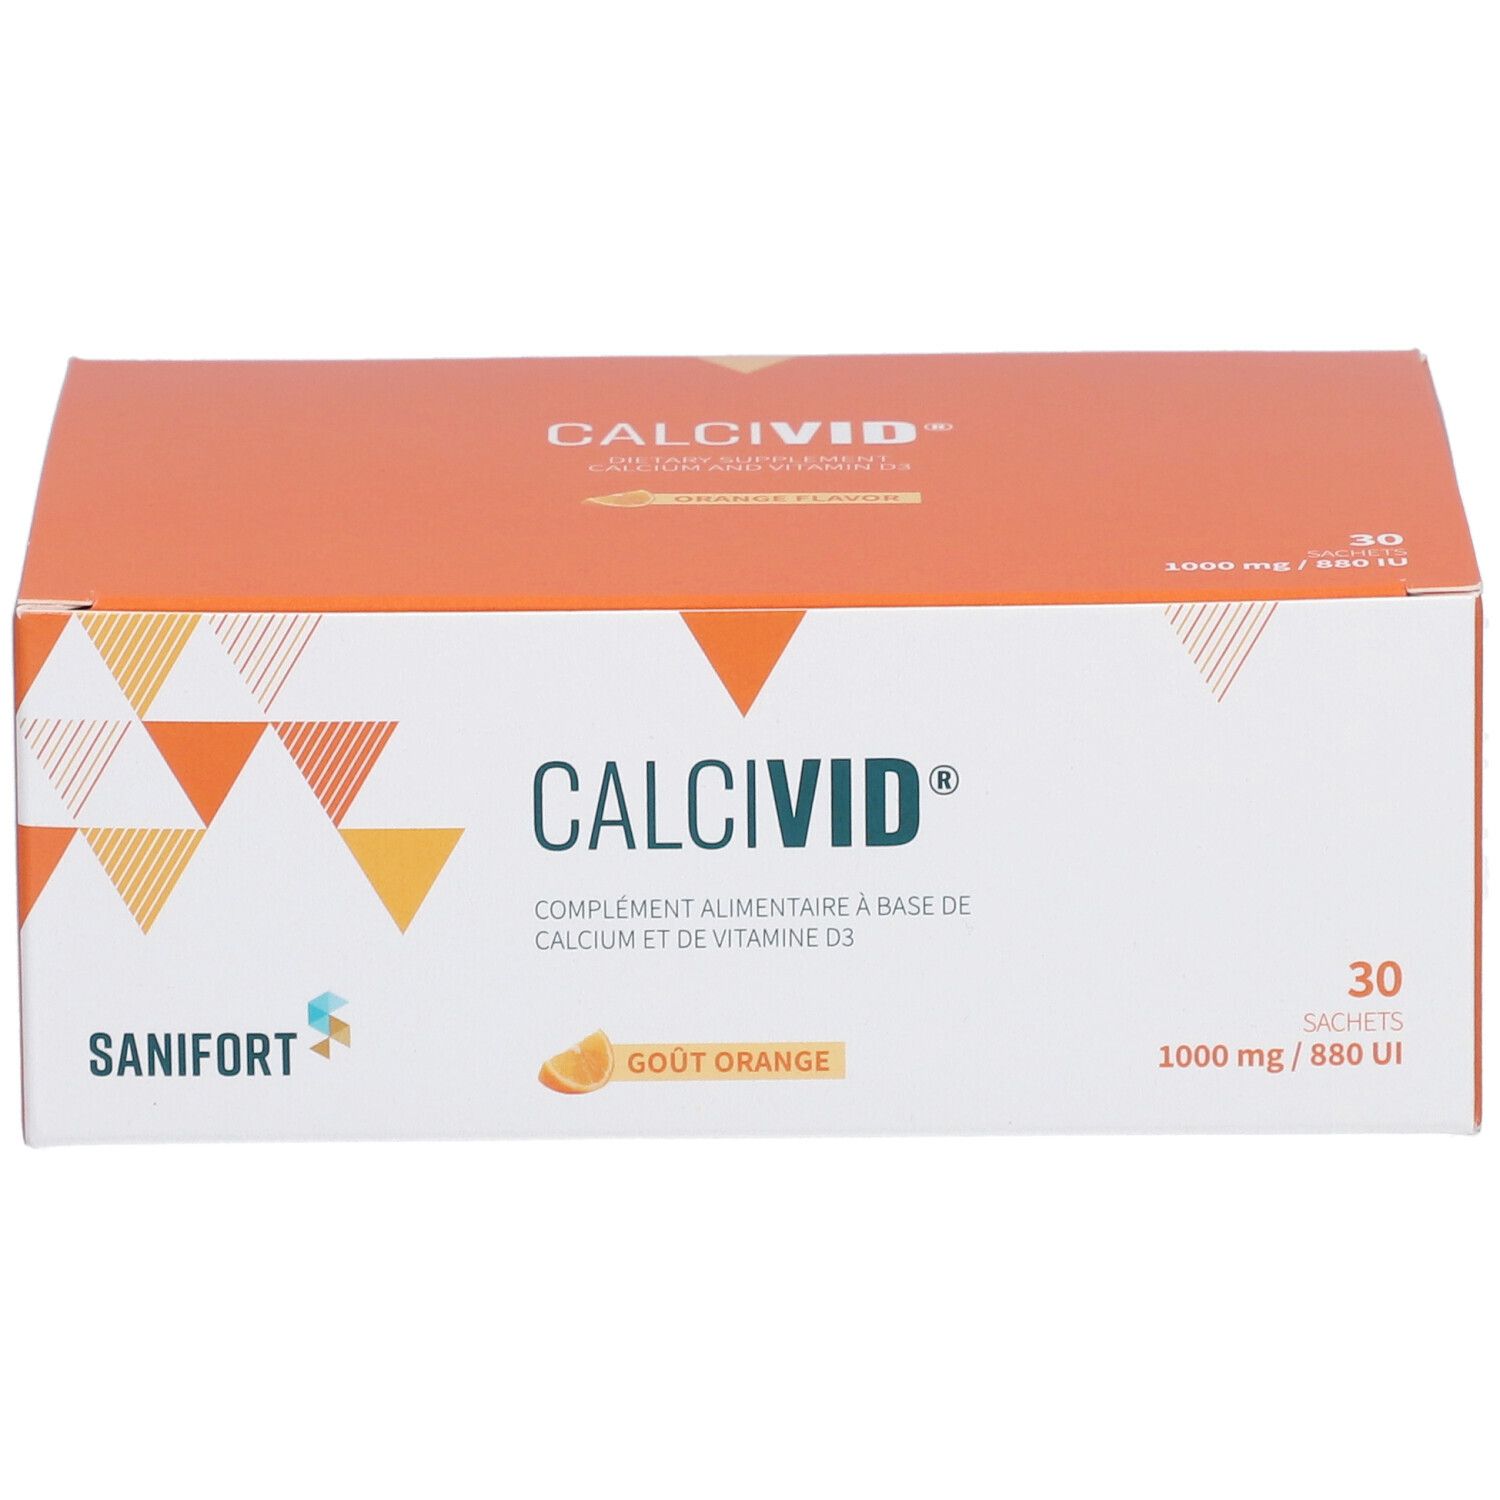 Calcivid 1000mg/880ie Orange